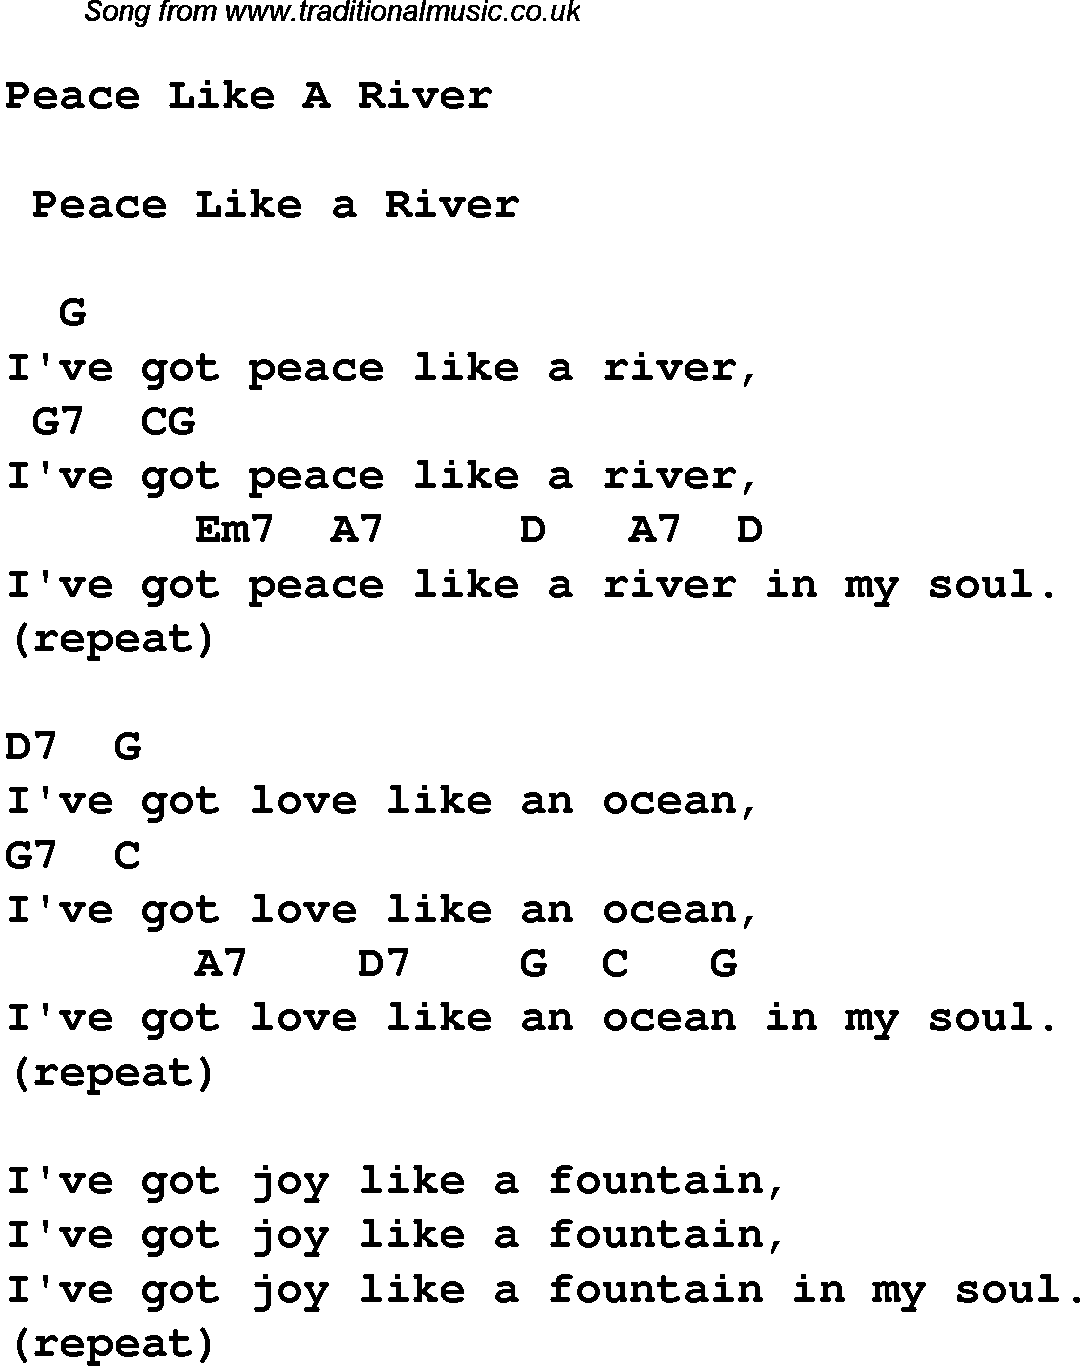 Peace Like A River - Christian Gospel Song Lyrics and Chords